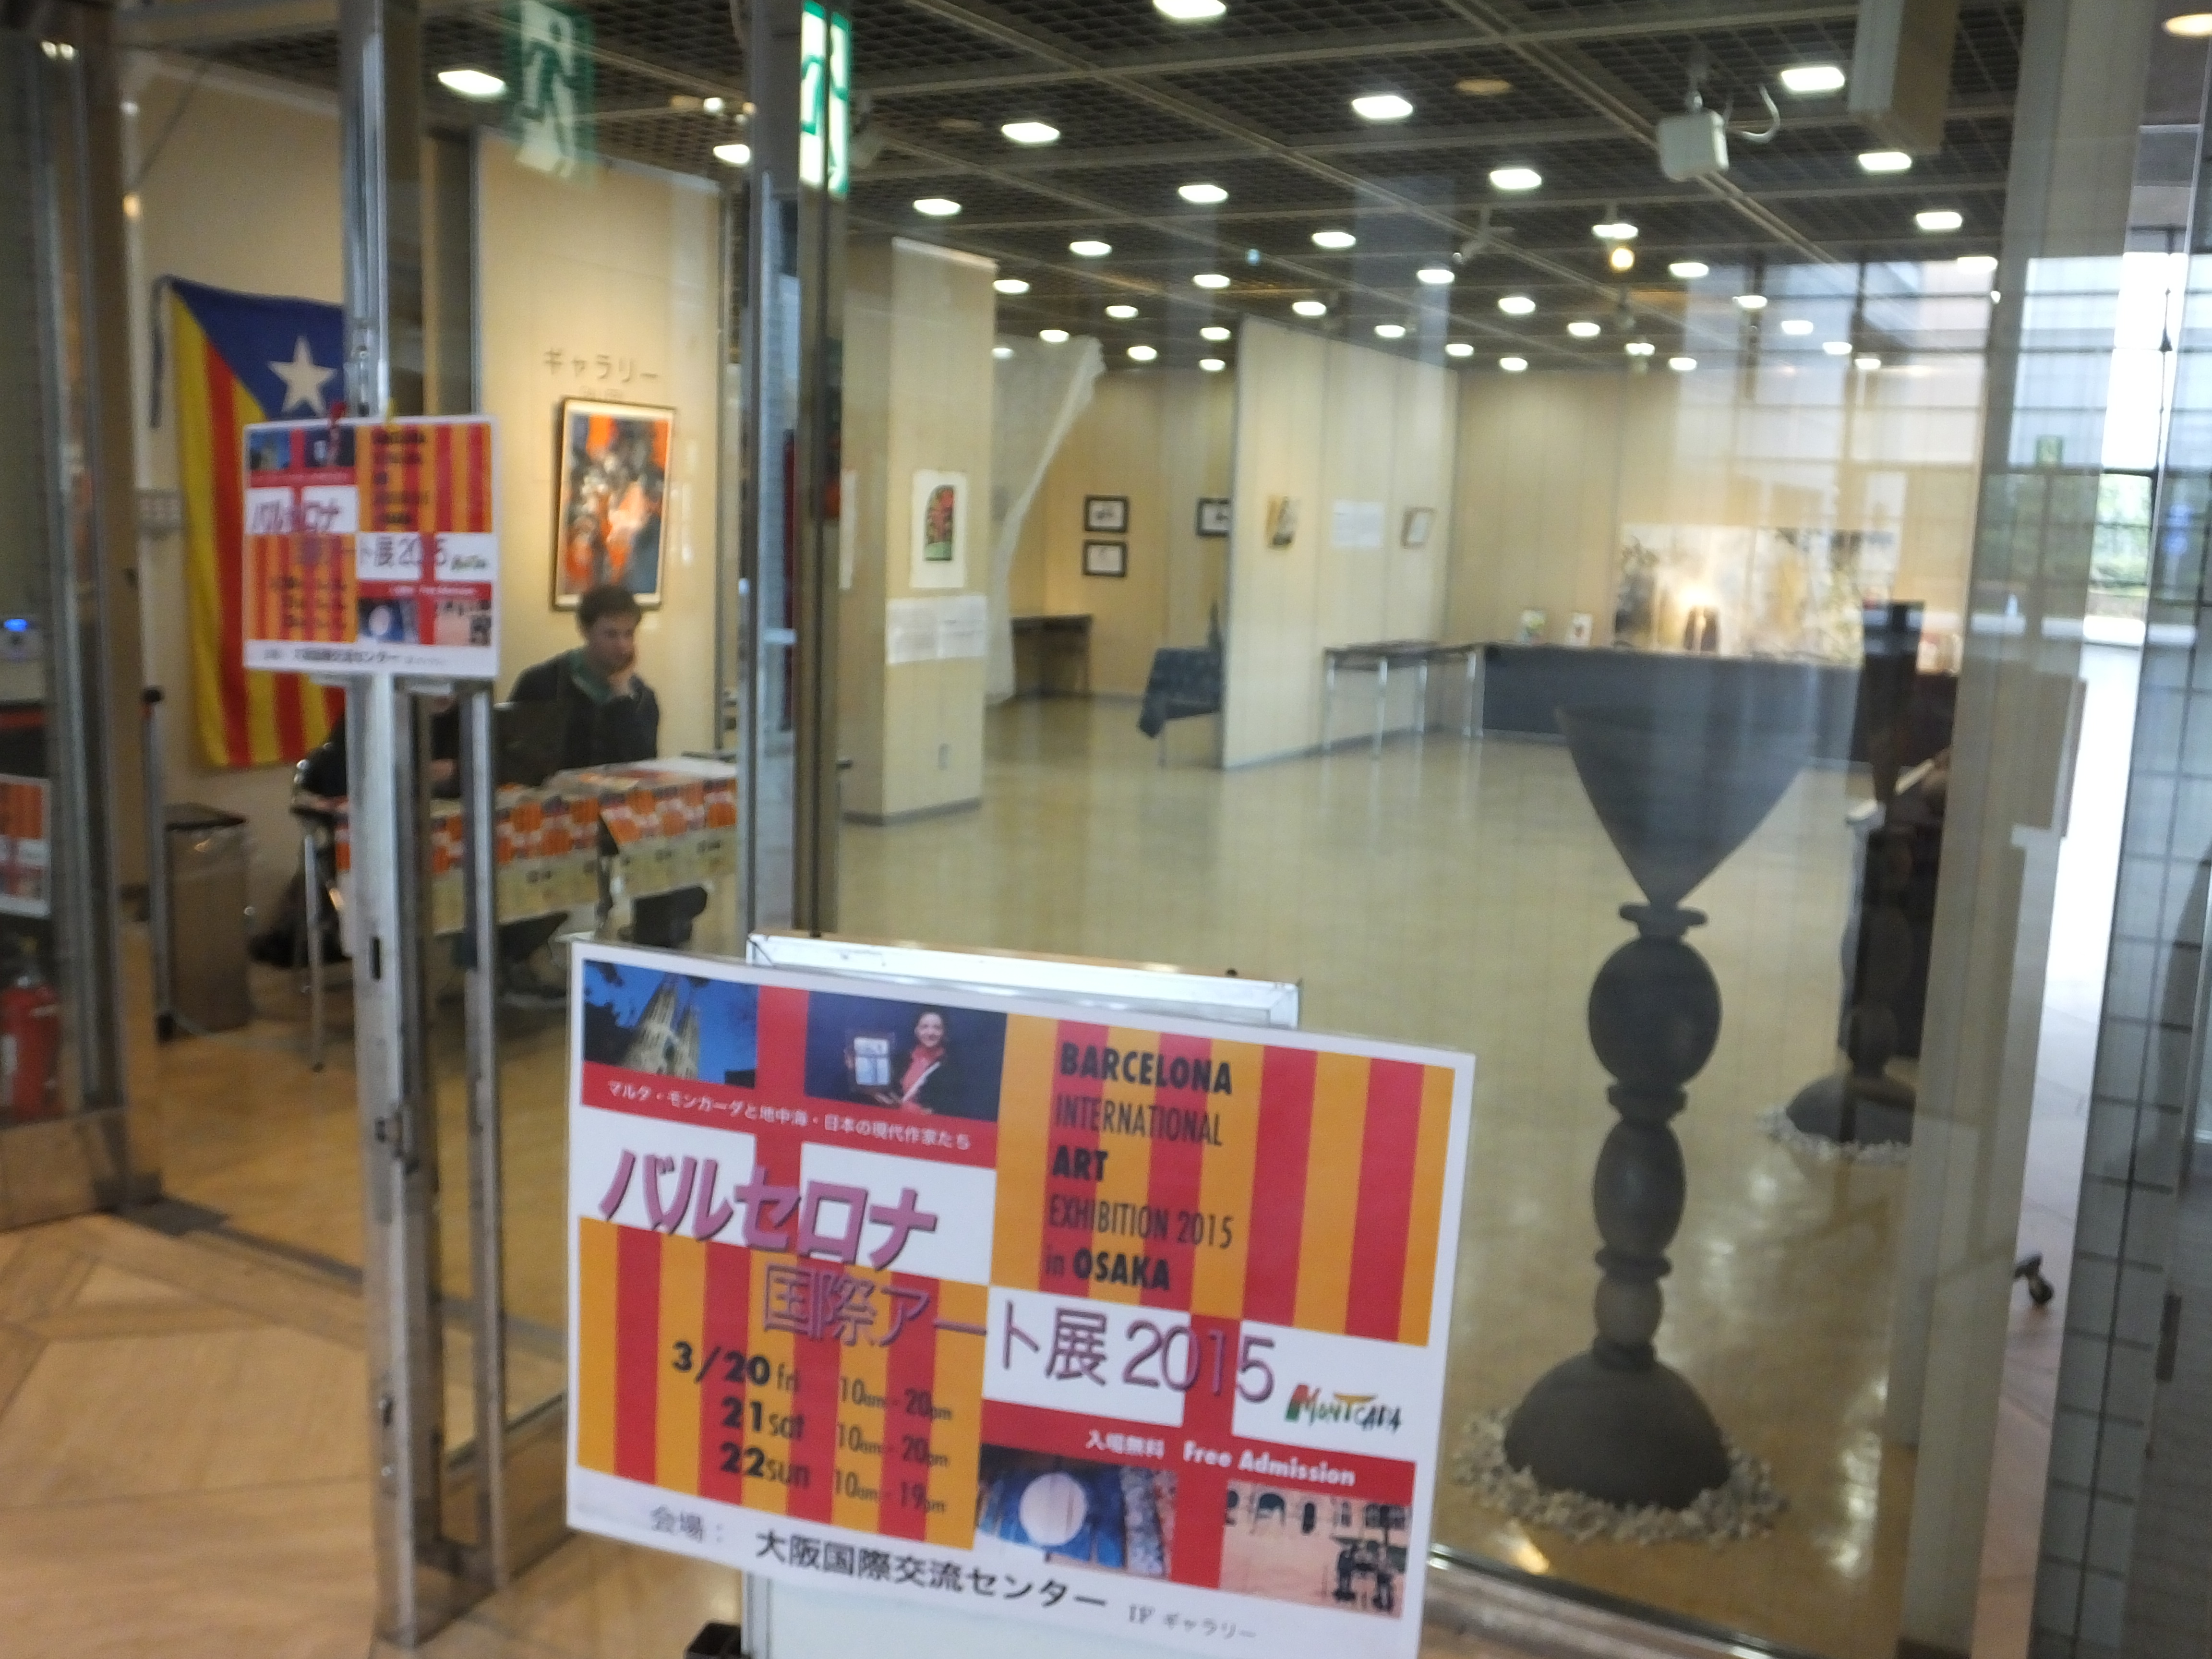 BCN International ART Exhibition in OSAKA 1